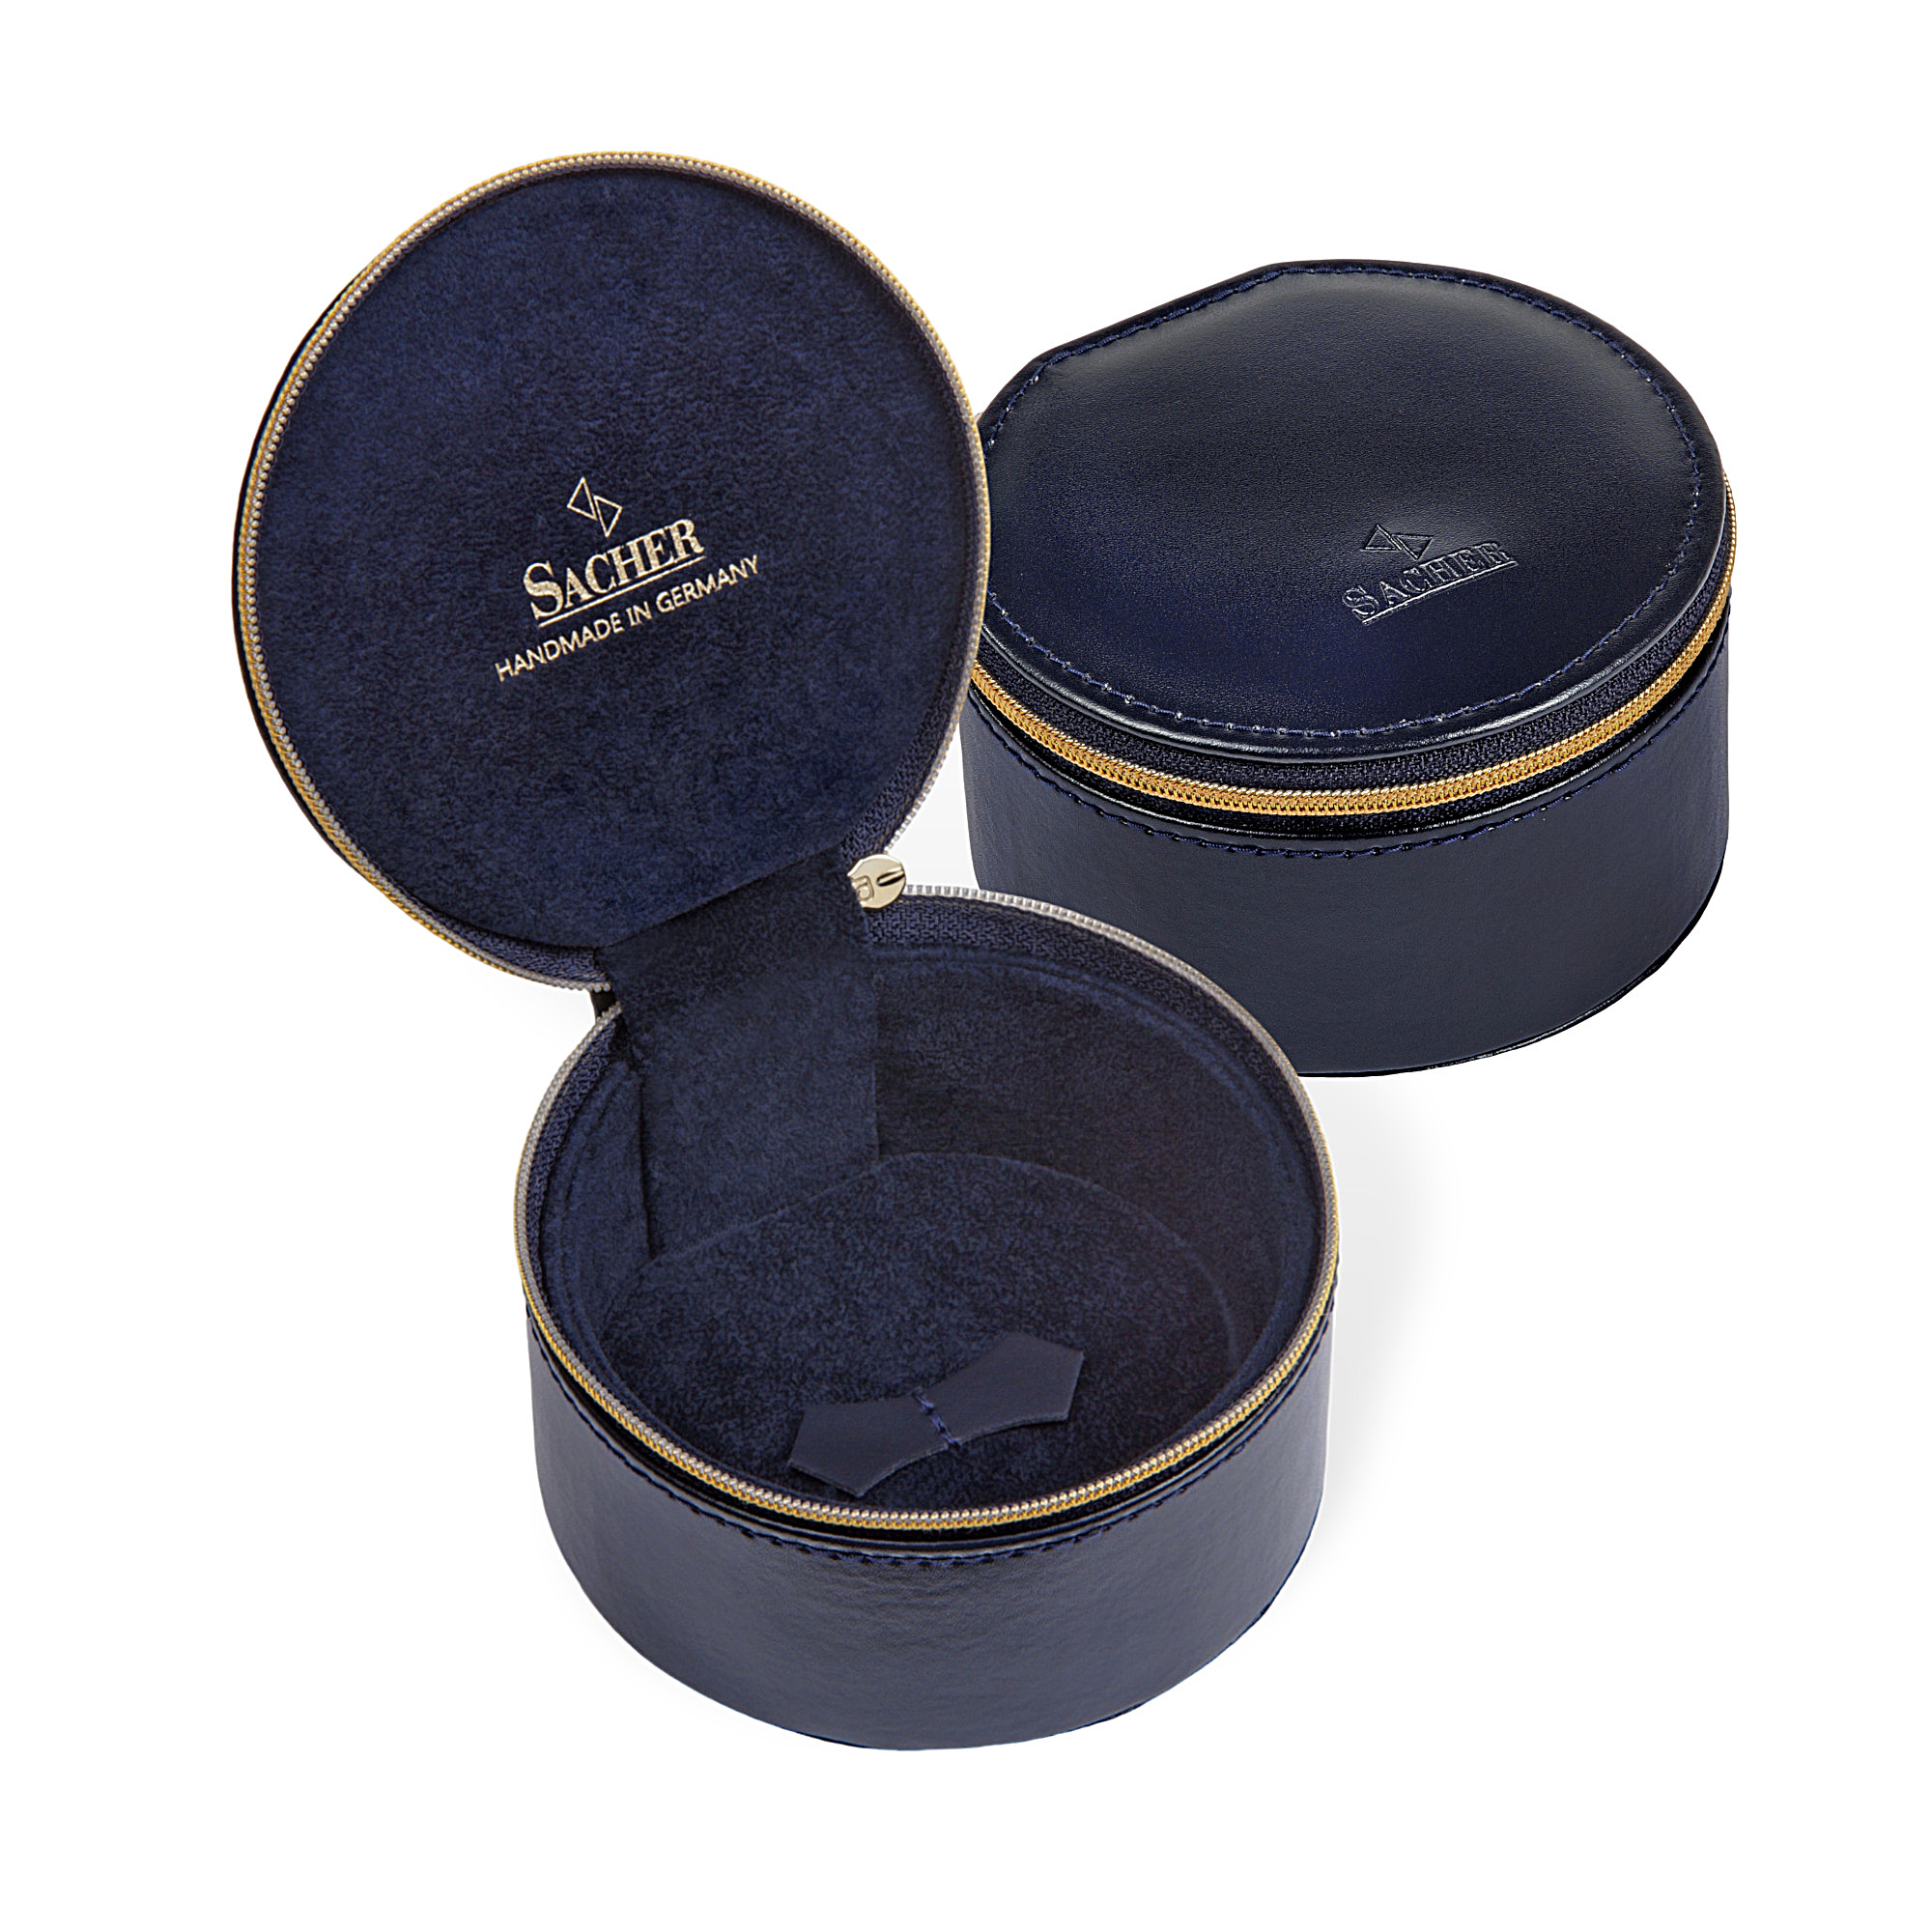 Jewellery box Betsy acuro / navy (leather) 